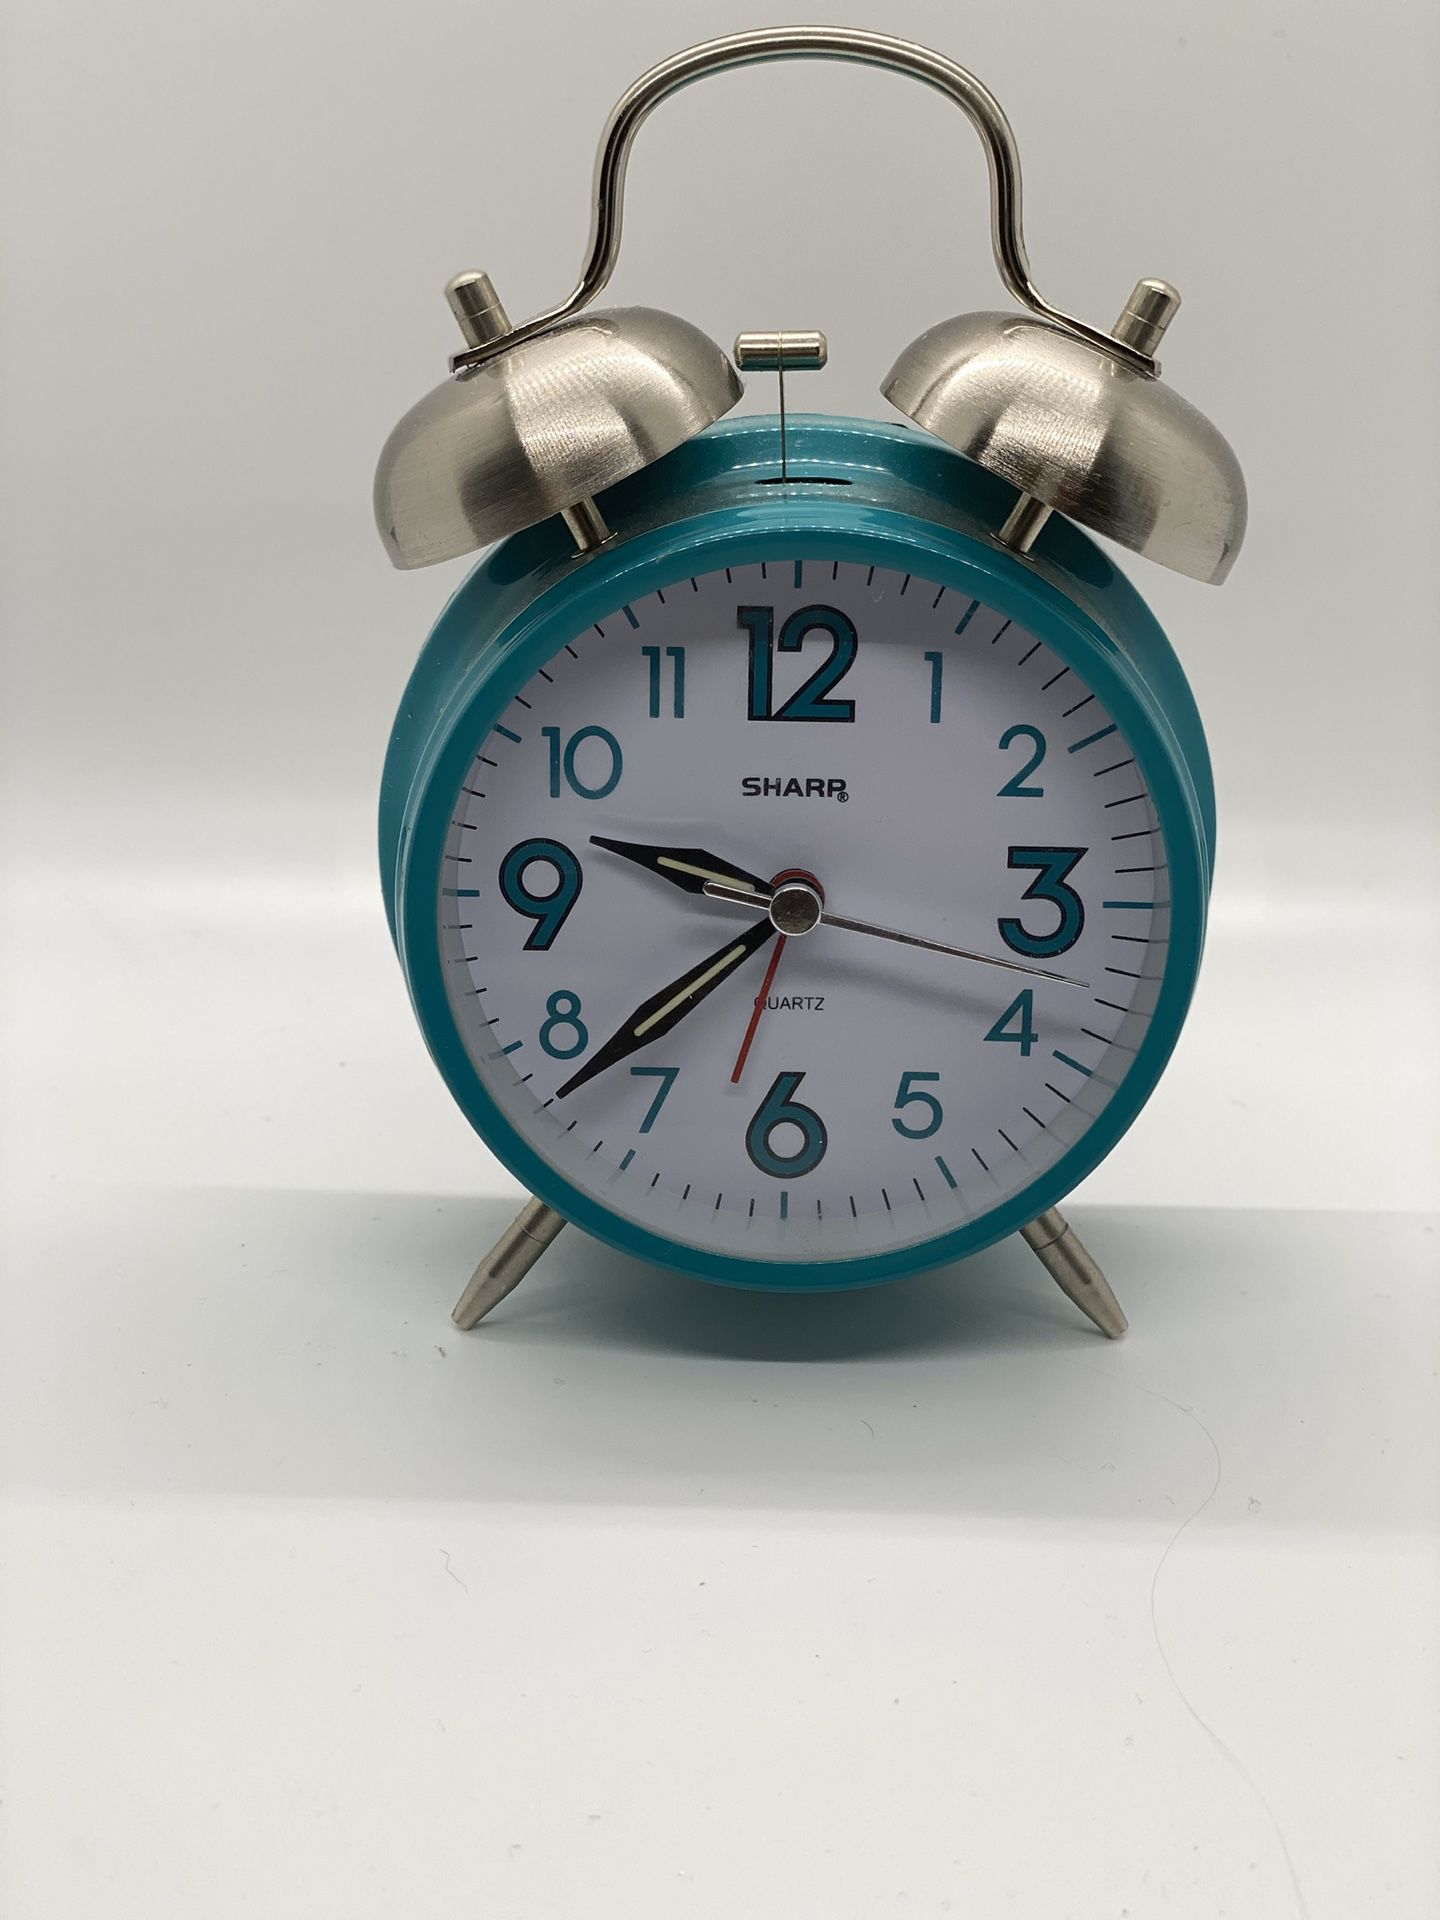 Vintage Inspired Alarm Clock